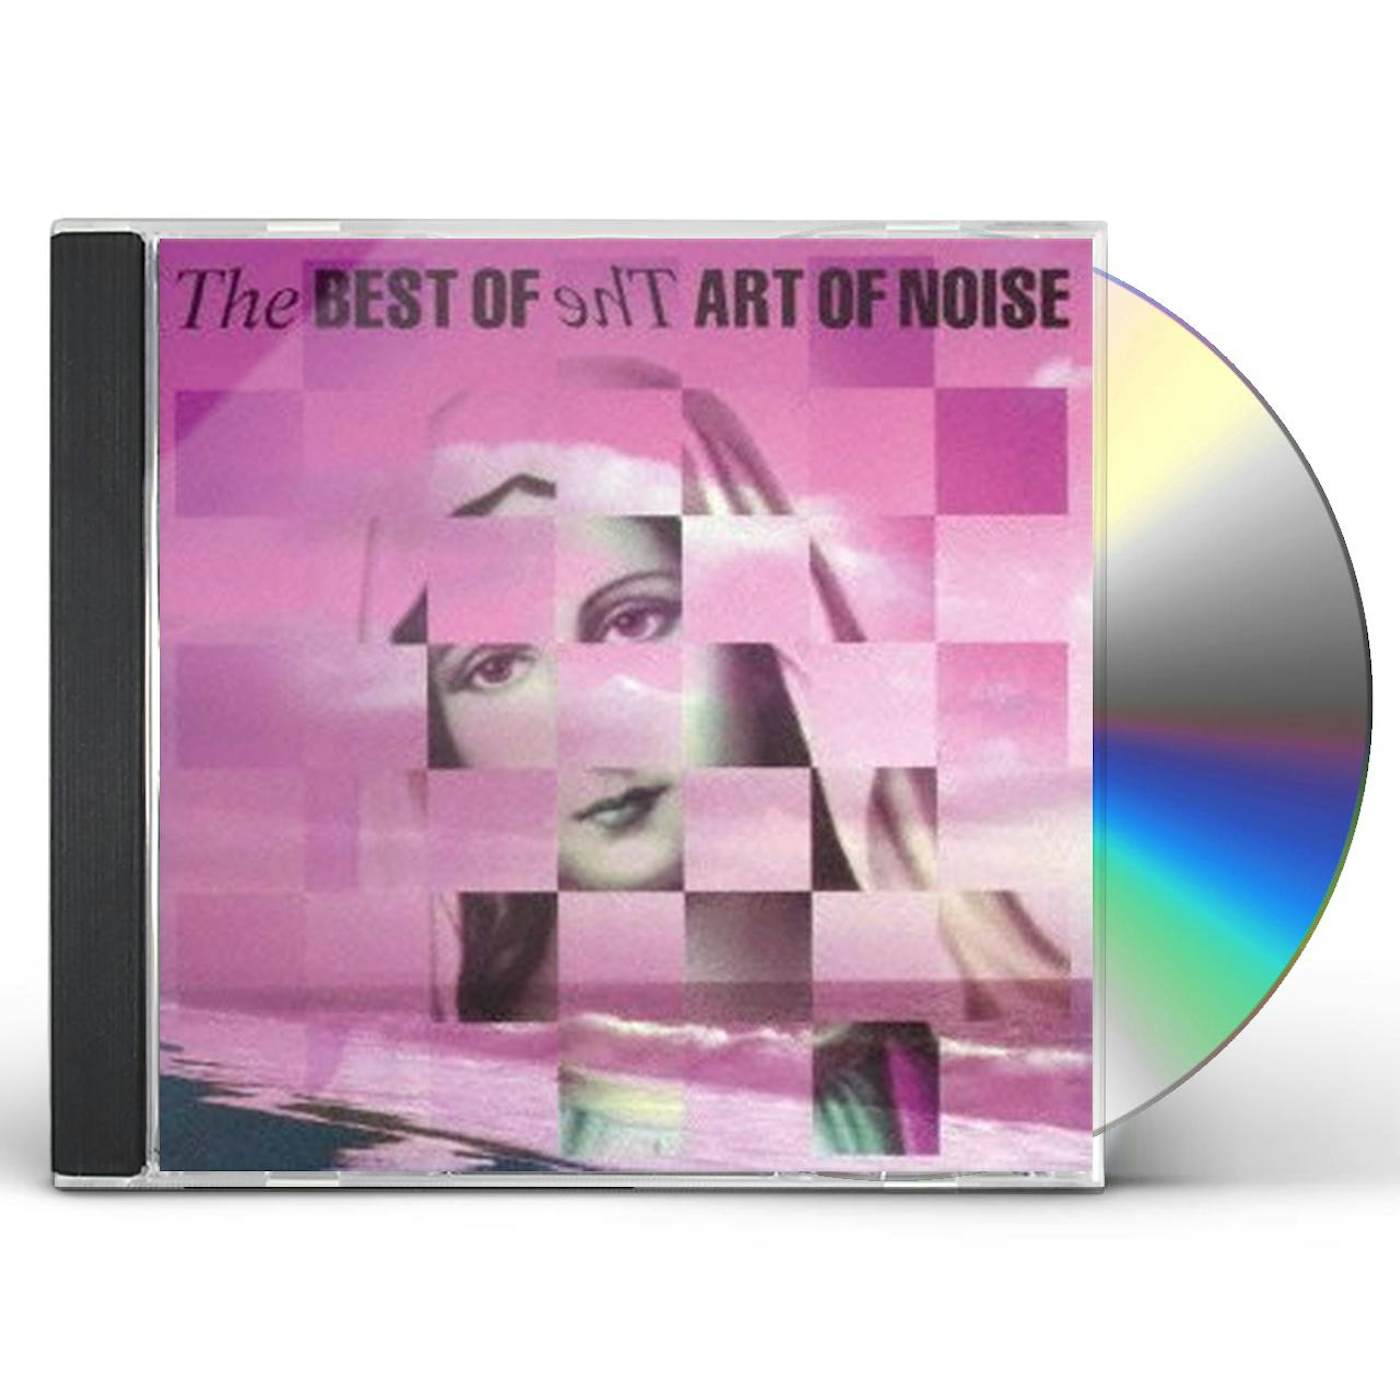 BEST OF THE ART OF NOISE CD